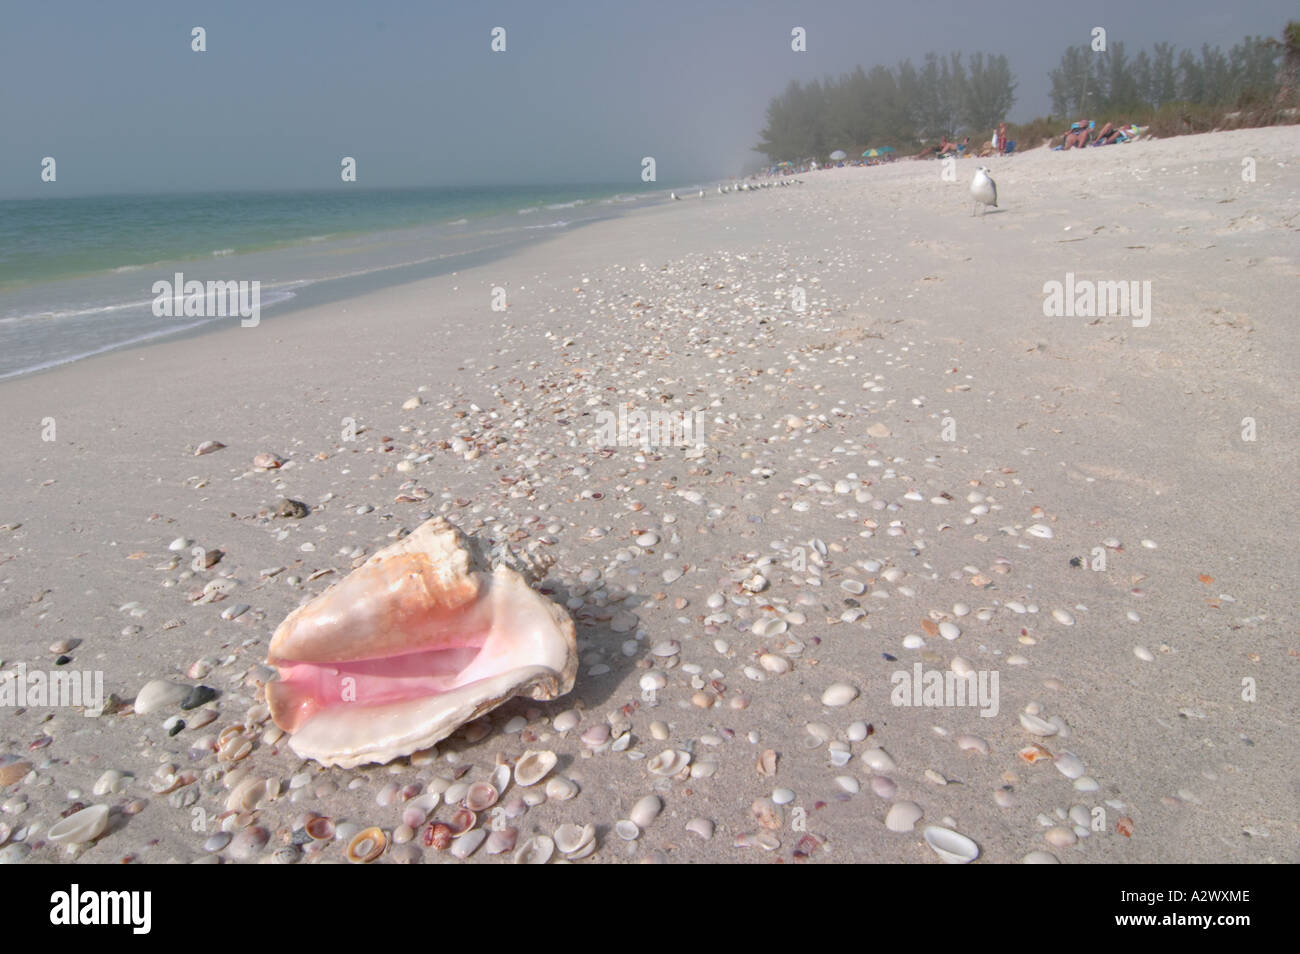 Siesta Key shelling?! I did see some shells at a Siesta Key beach